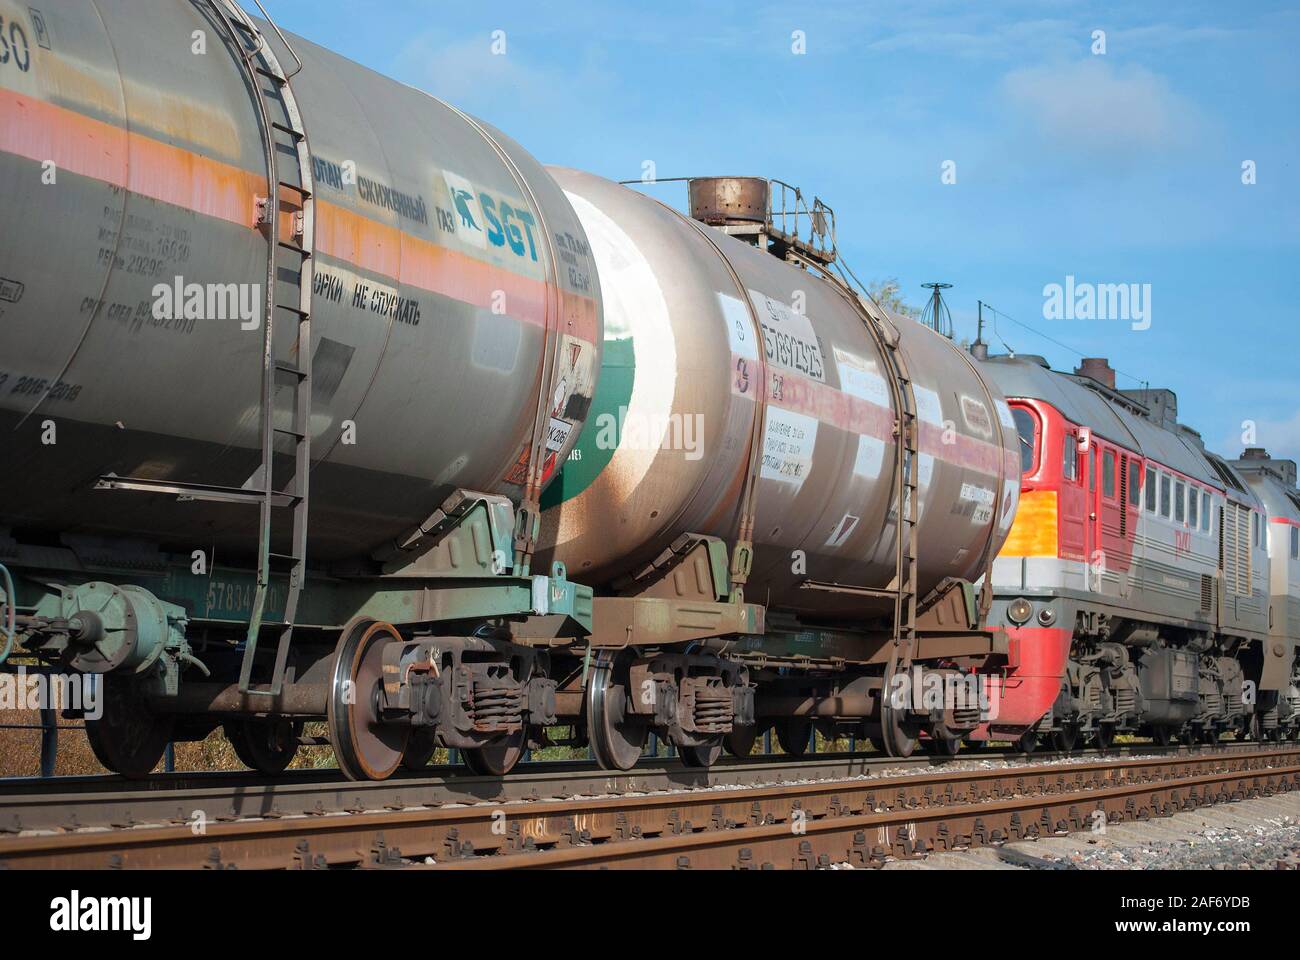 Kaliningrad region, Russia - October 15, 2017: Train of Freight Tank Wagons on the Railway Stock Photo